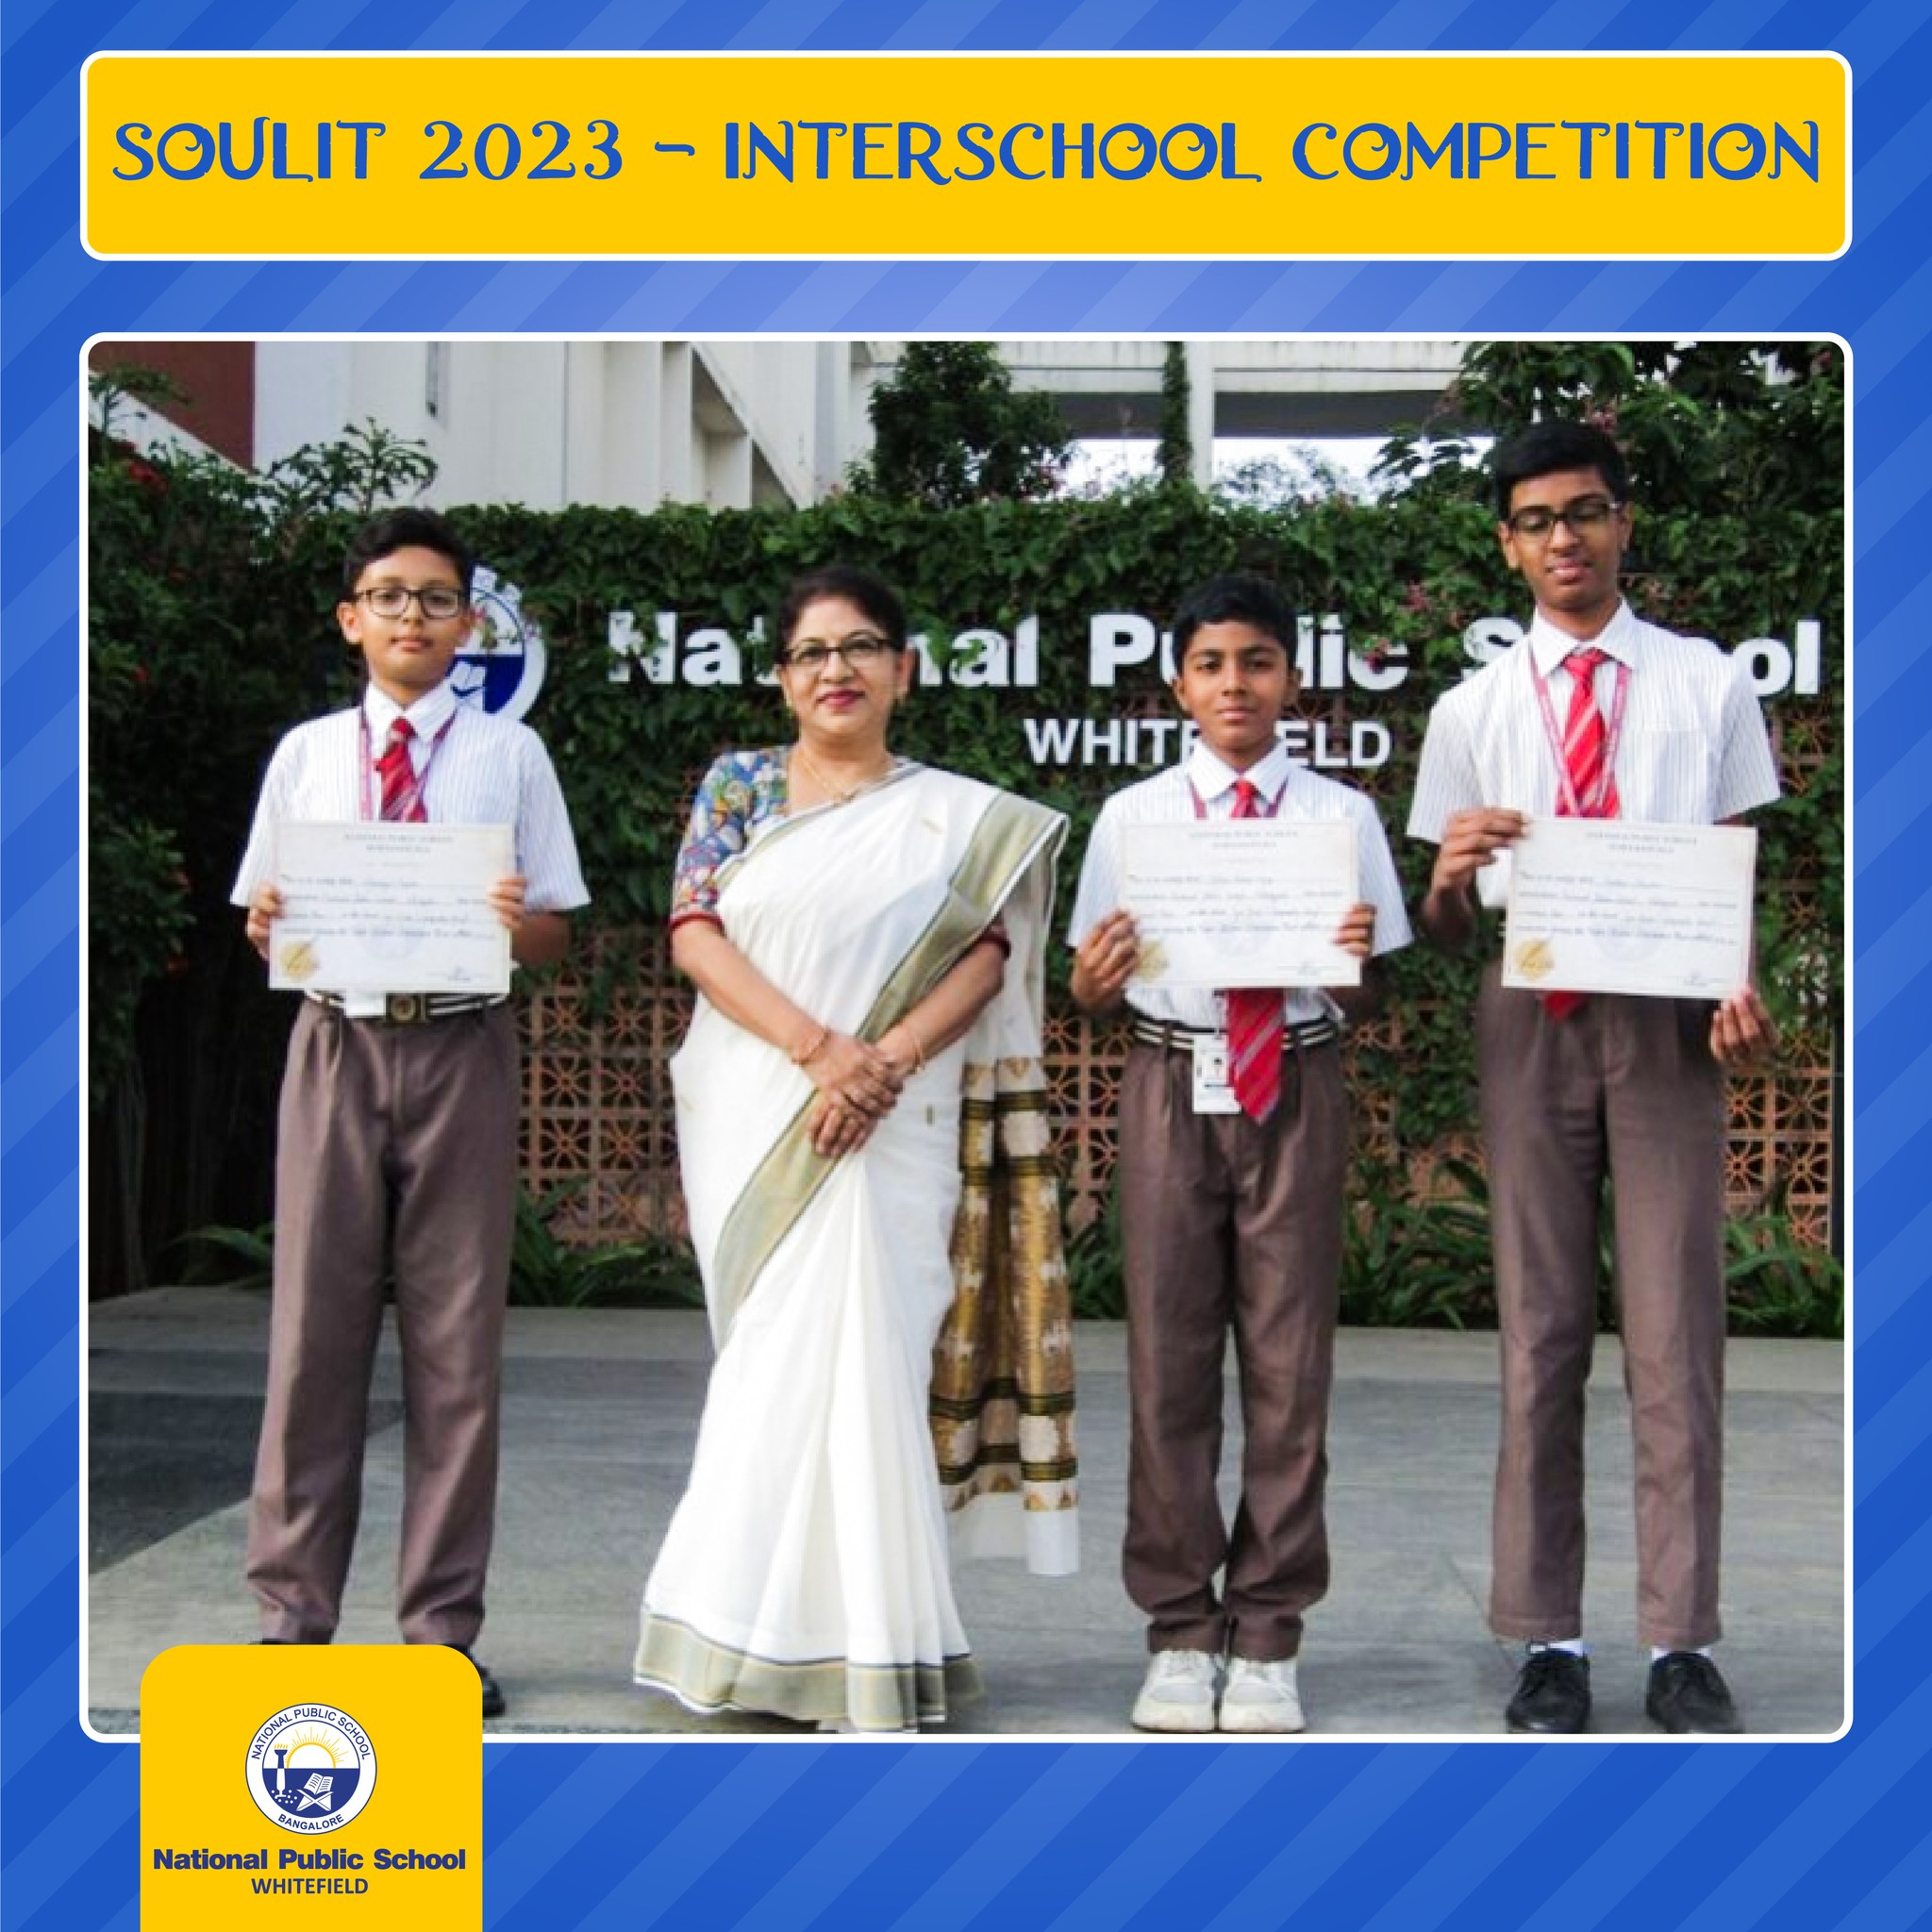 SOULIT 2023 – Interschool Competition